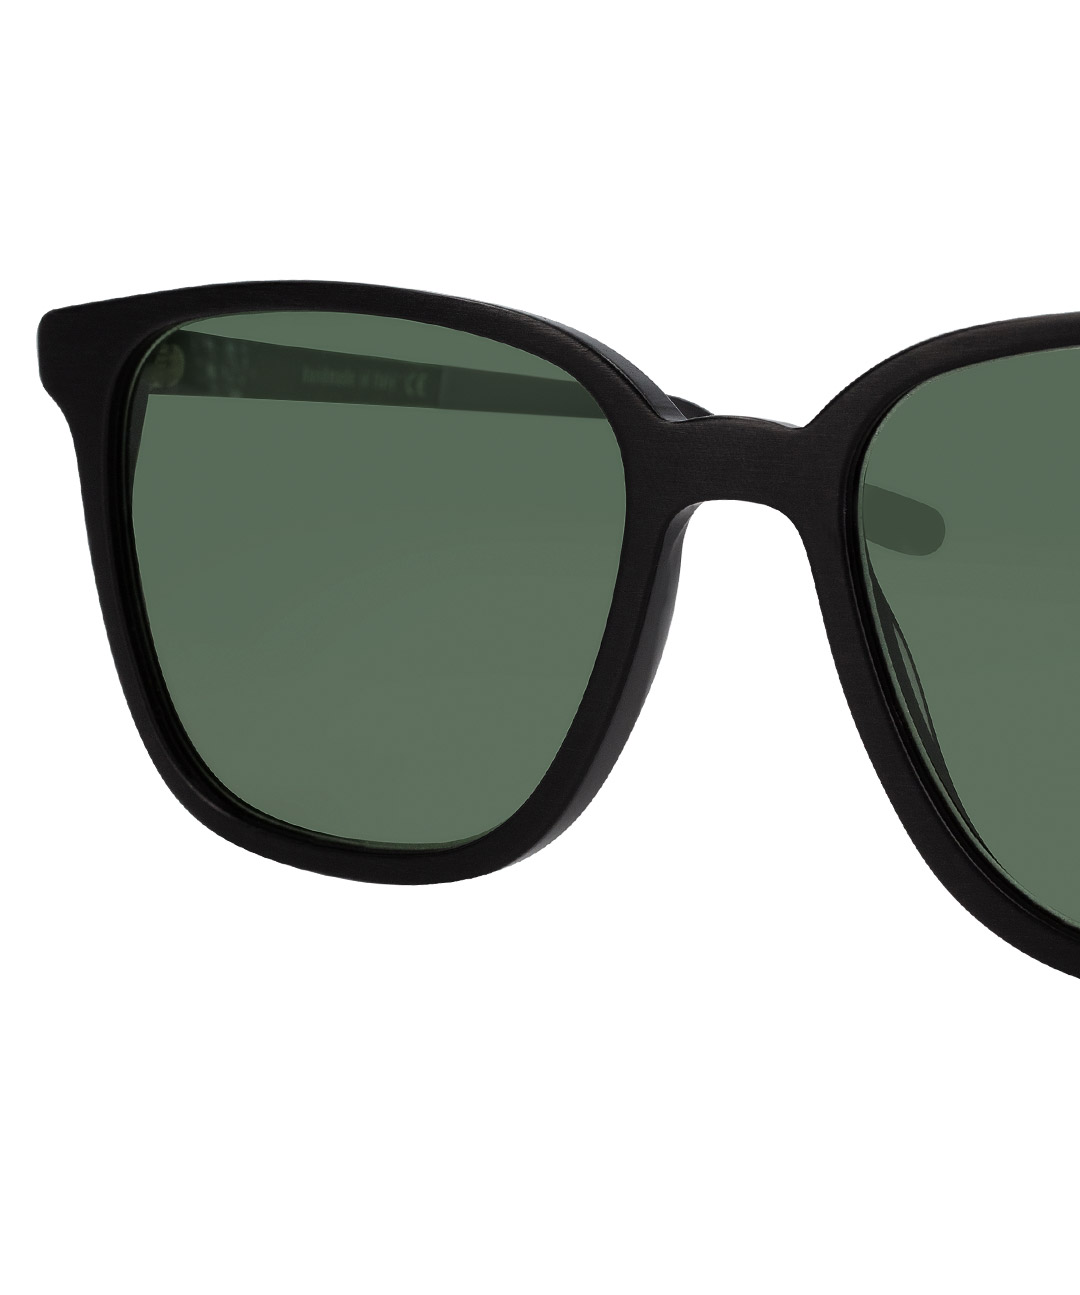 Sonnenbrille Boxhagener Black Matte Green | Lilienthal Berlin -  Preisgekrönte Designs